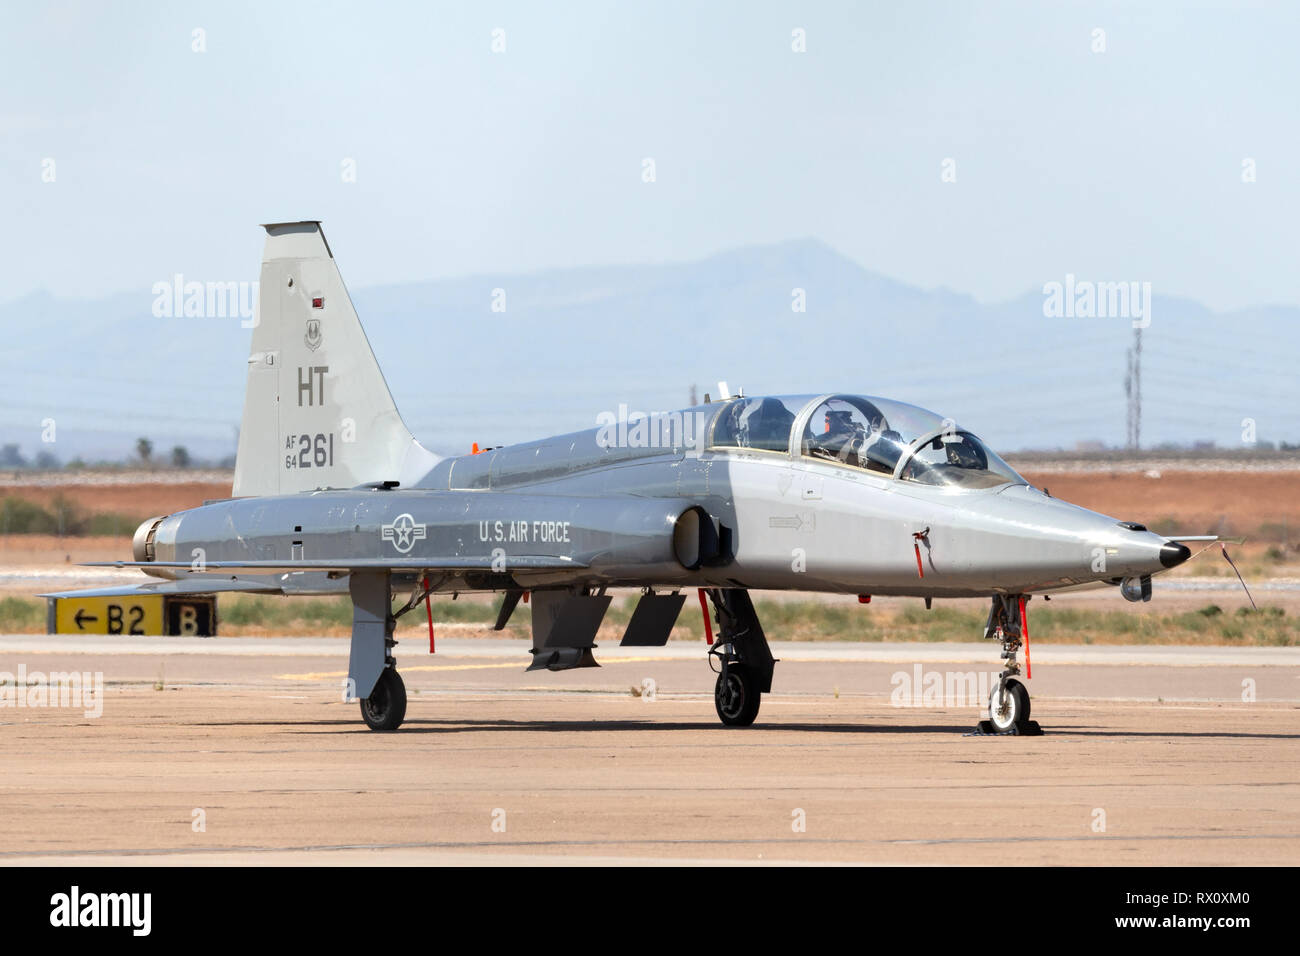 US AIR FORCE USAF T-38 Talon aircraft DD 8X12 PHOTOGRAPH 